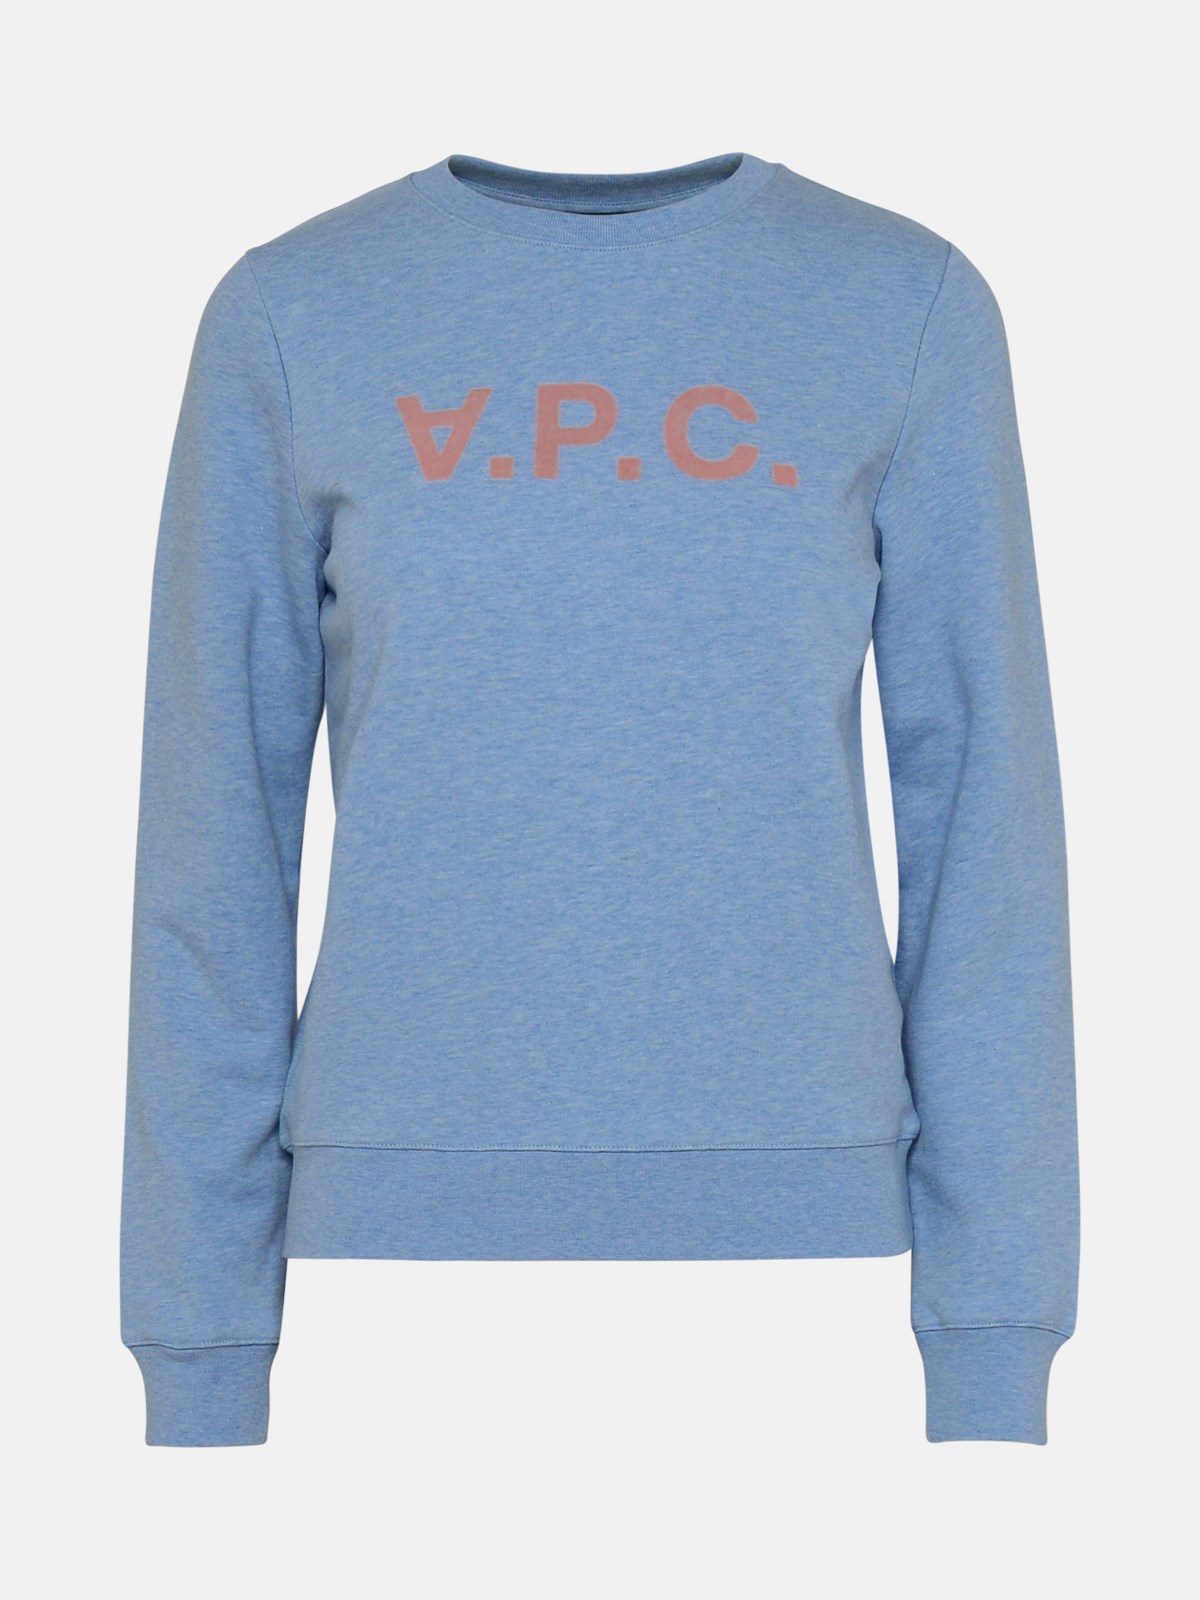 Apc Kids' Light Blue Cotton Viva Sweatshirt